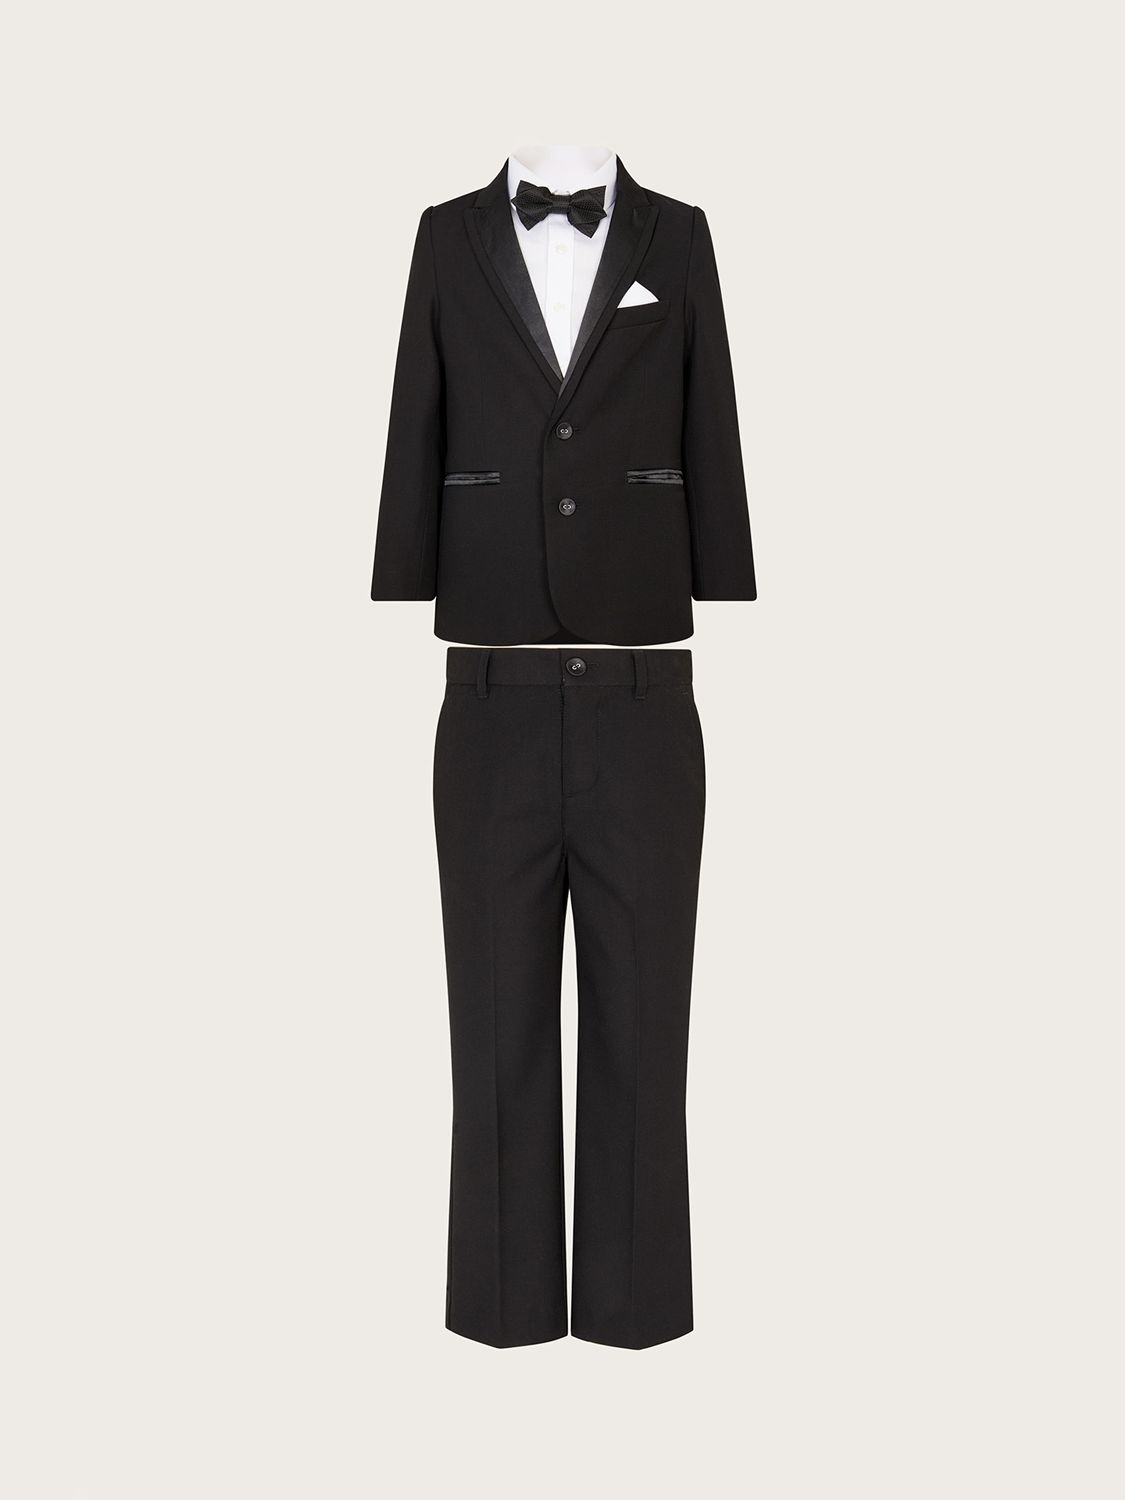 Monsoon Kids' Benjamin Tuxedo 4 Piece Suit, Black, 8 years